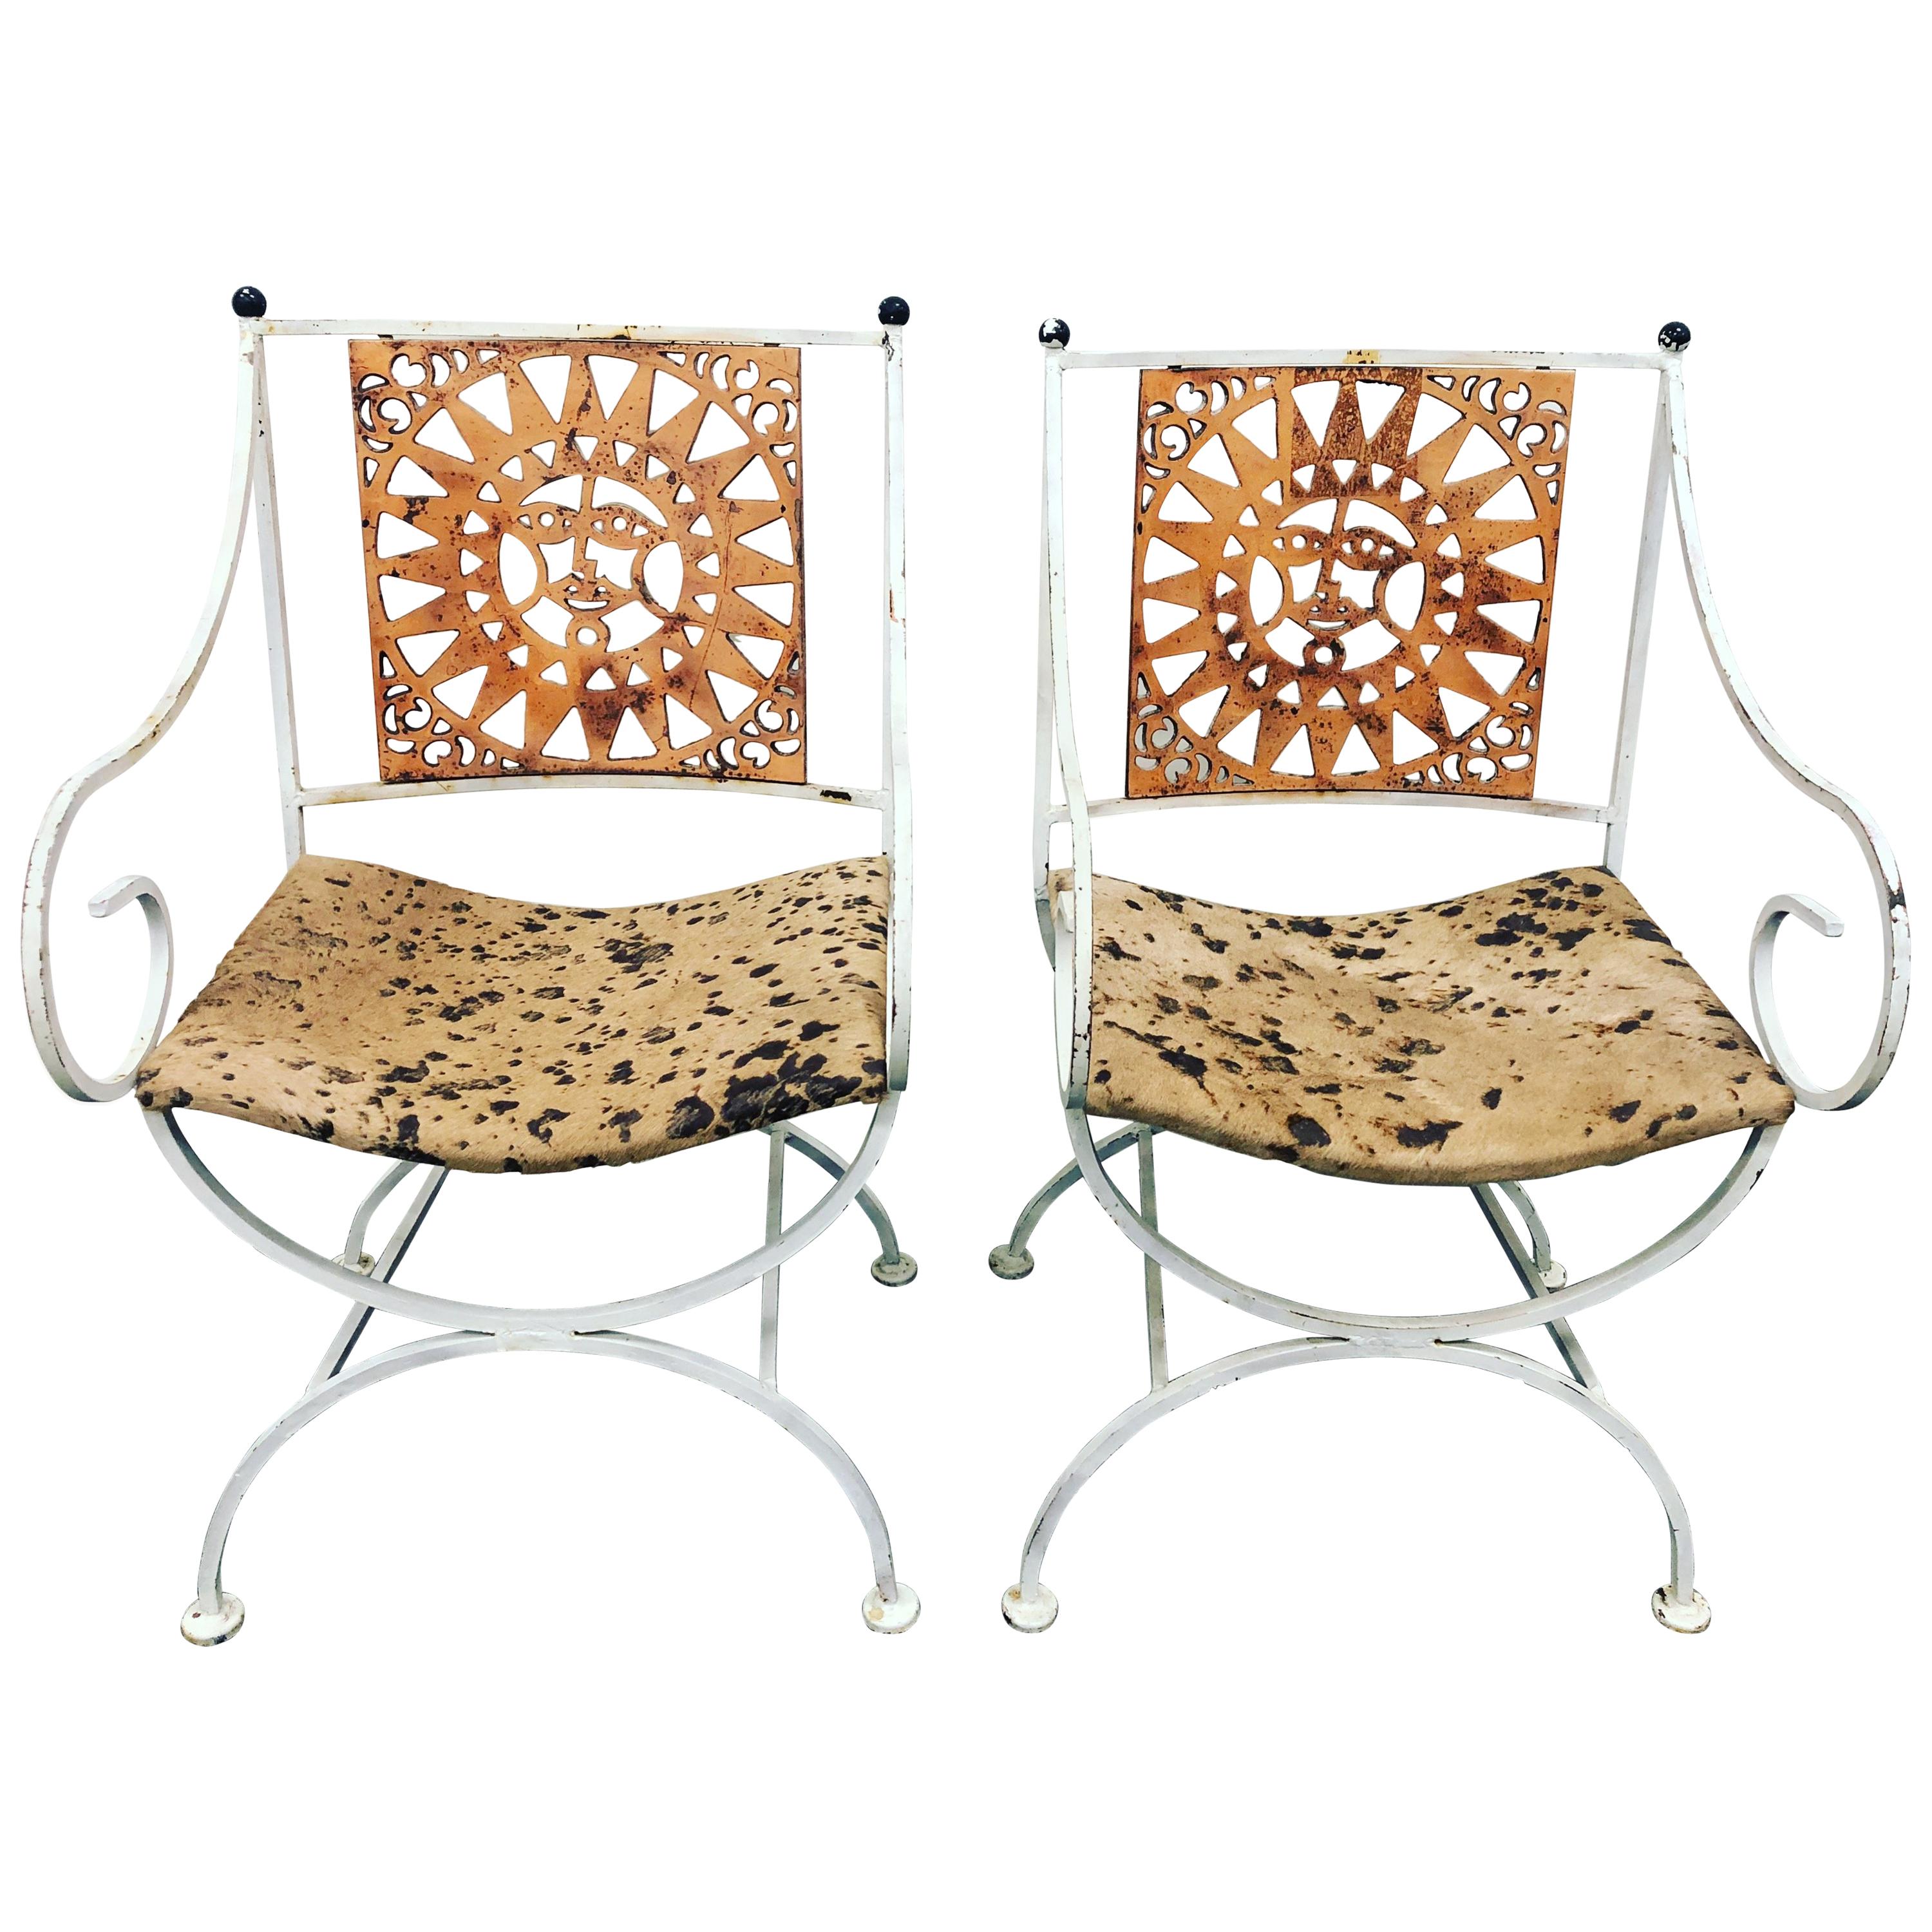 Midcentury Sunburst Chairs by Umanoff For Sale